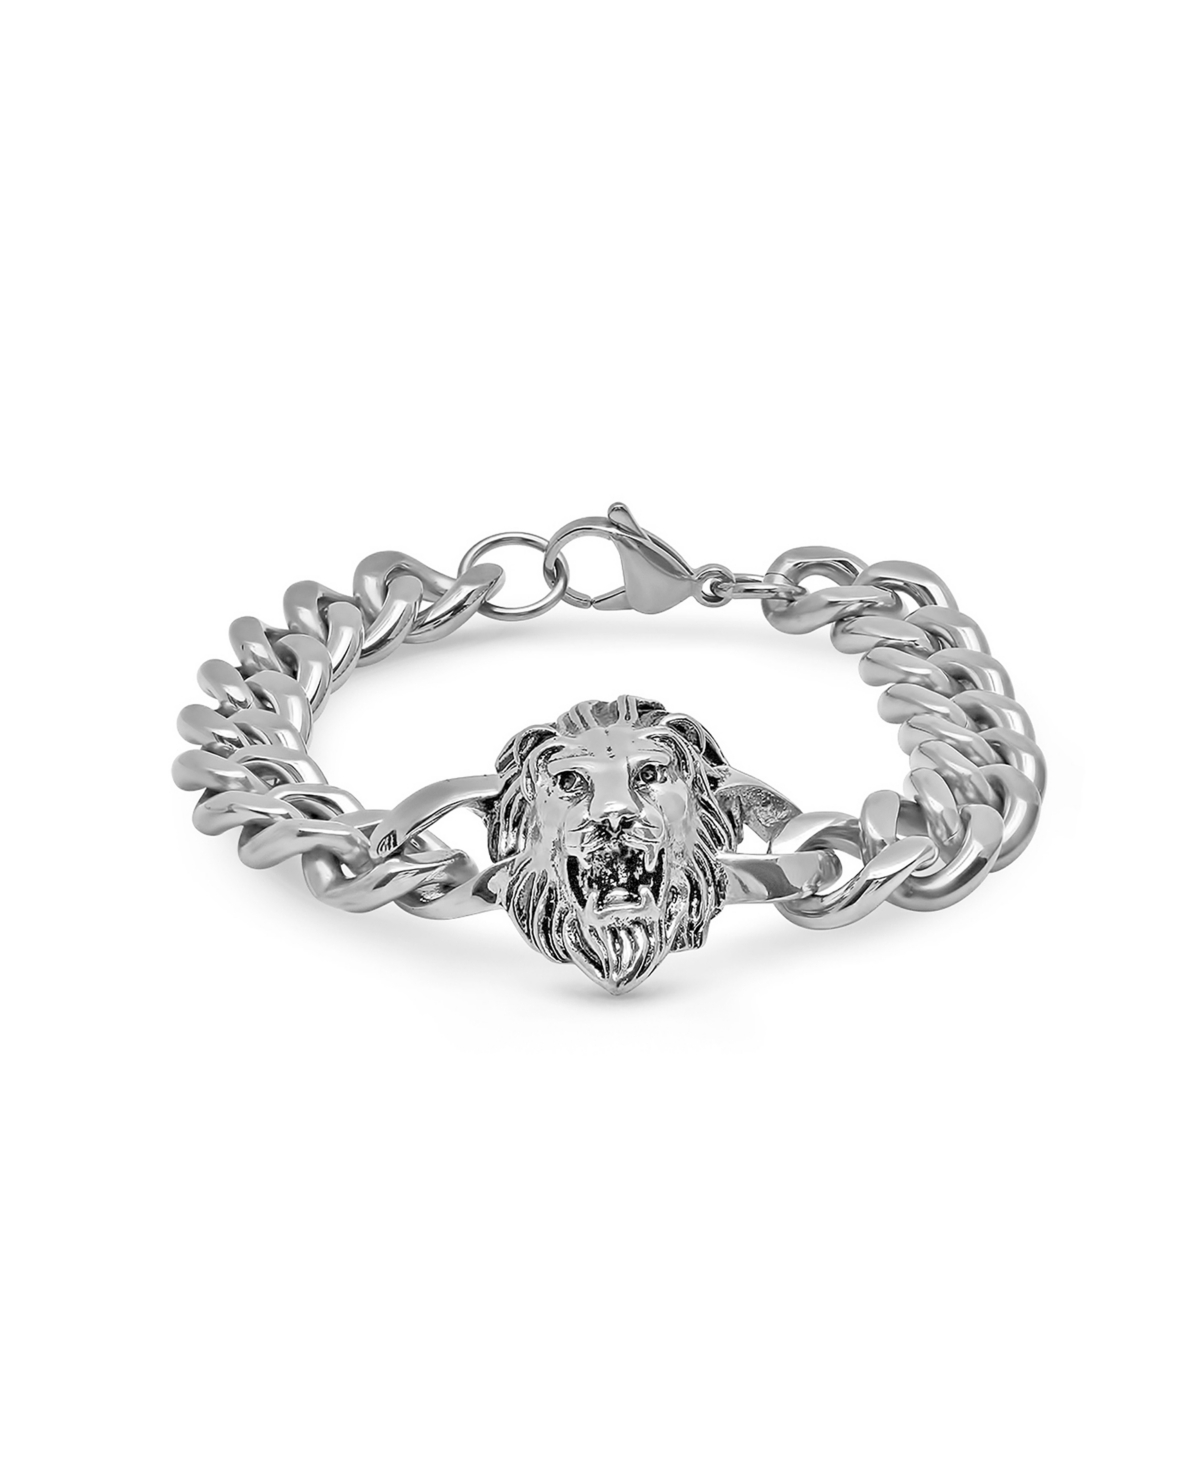 Men's Stainless Steel Lion Head Chain Link Bracelet - Silver-tone